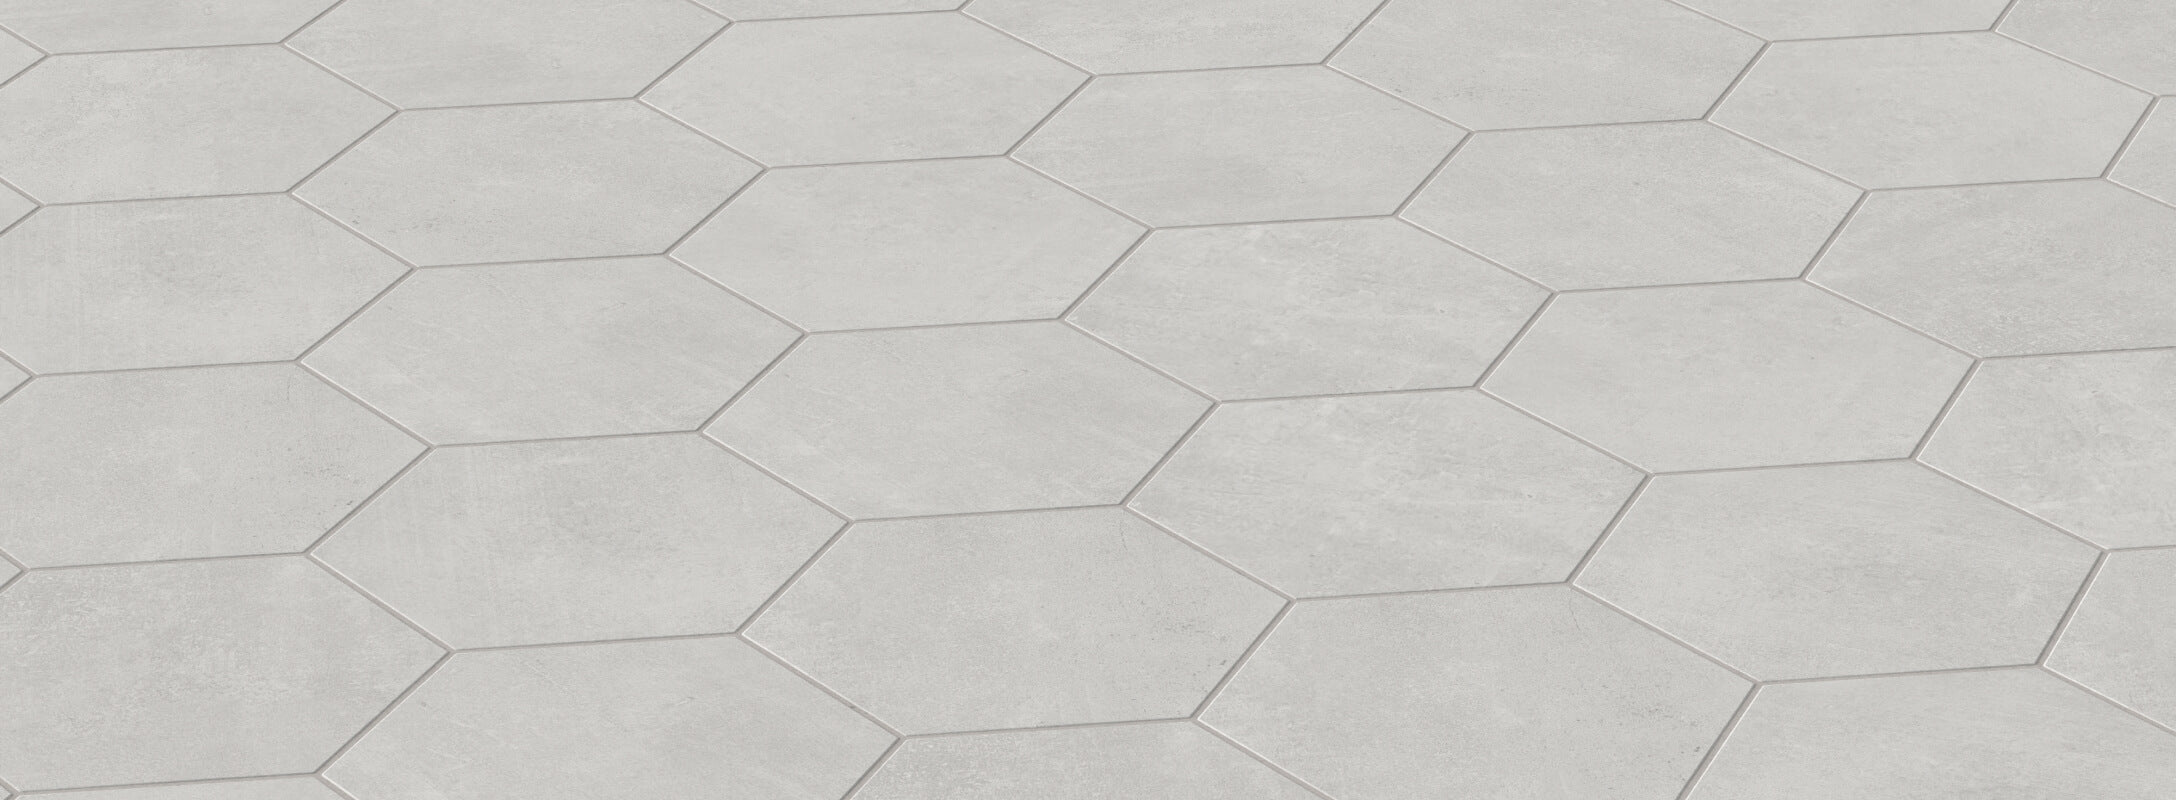 Light grey hexagonal tiles create a modern and sleek flooring option, perfect for contemporary kitchen designs